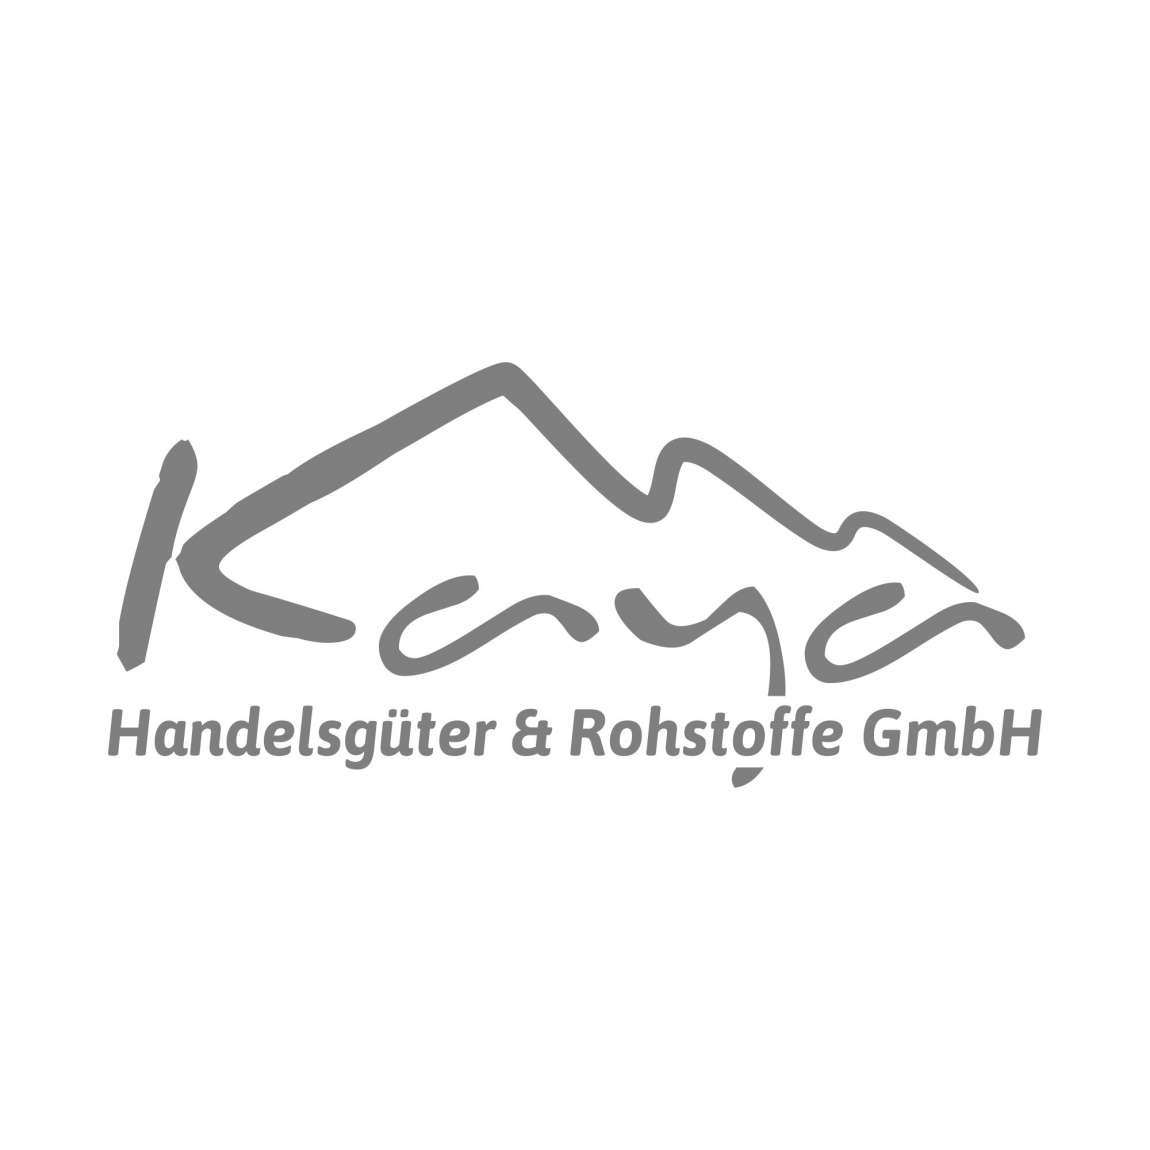 Kaya Handelsgüter & Rohstoffe GmbH - Katzenstreu Eigenmarken